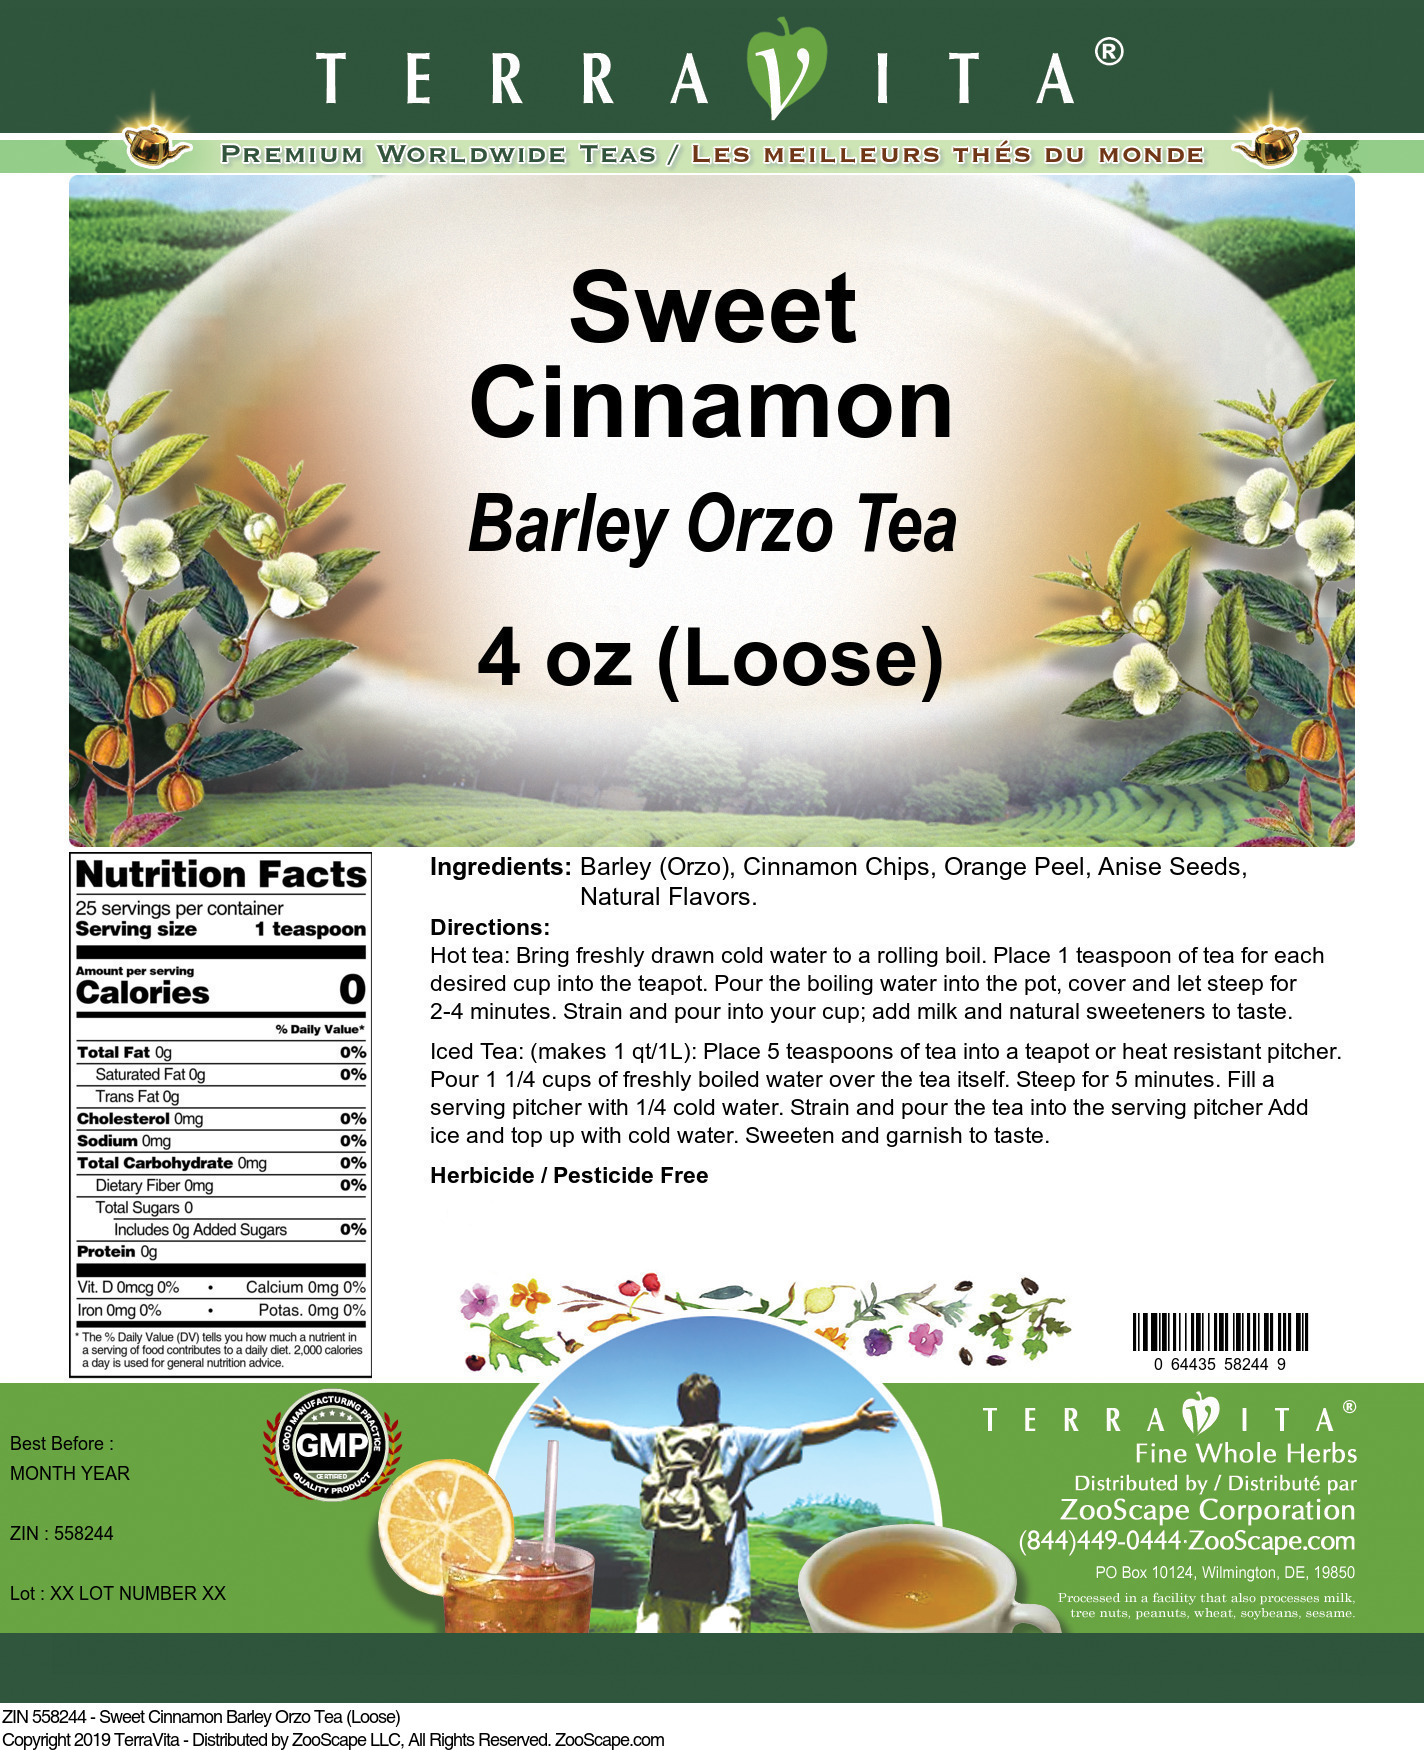 Sweet Cinnamon Barley Orzo Tea (Loose) - Label